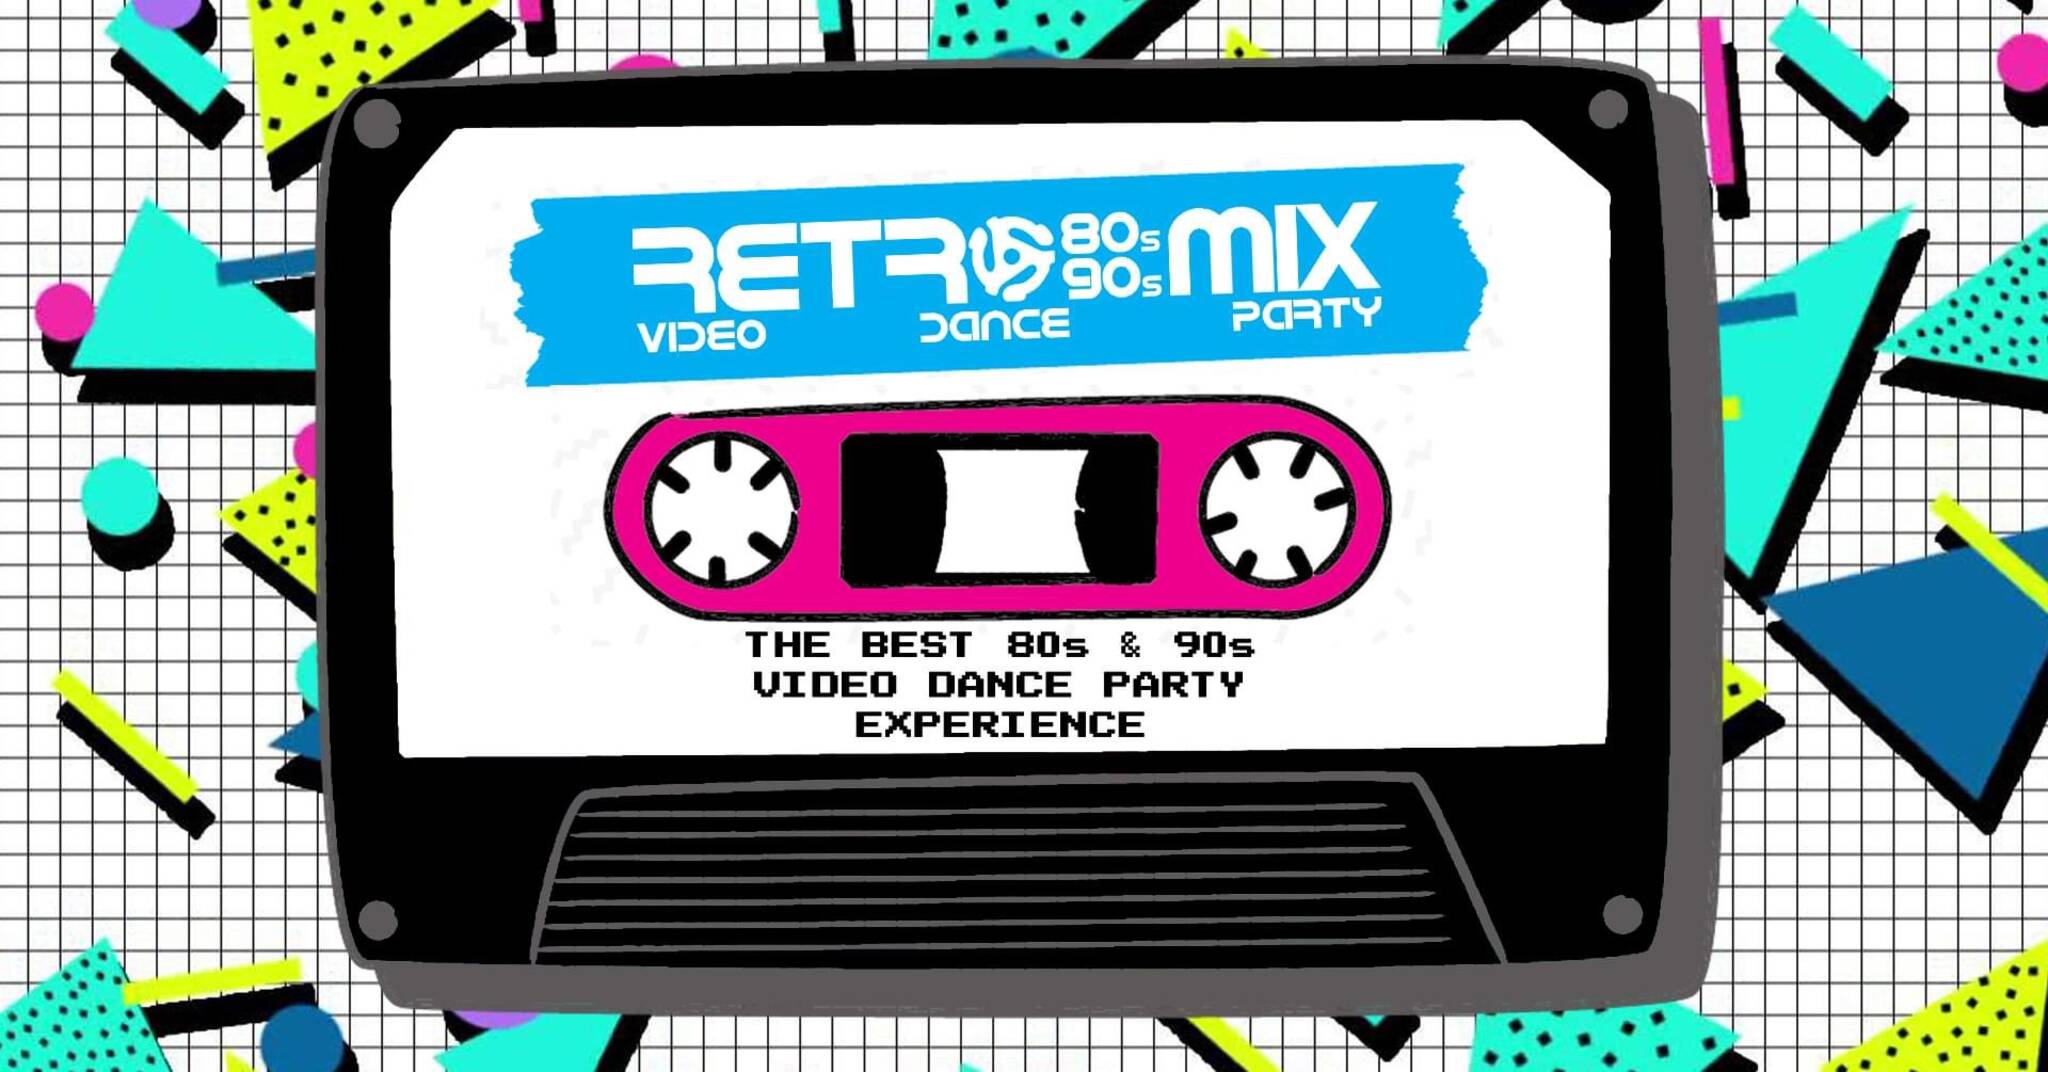 Retro Mix Video